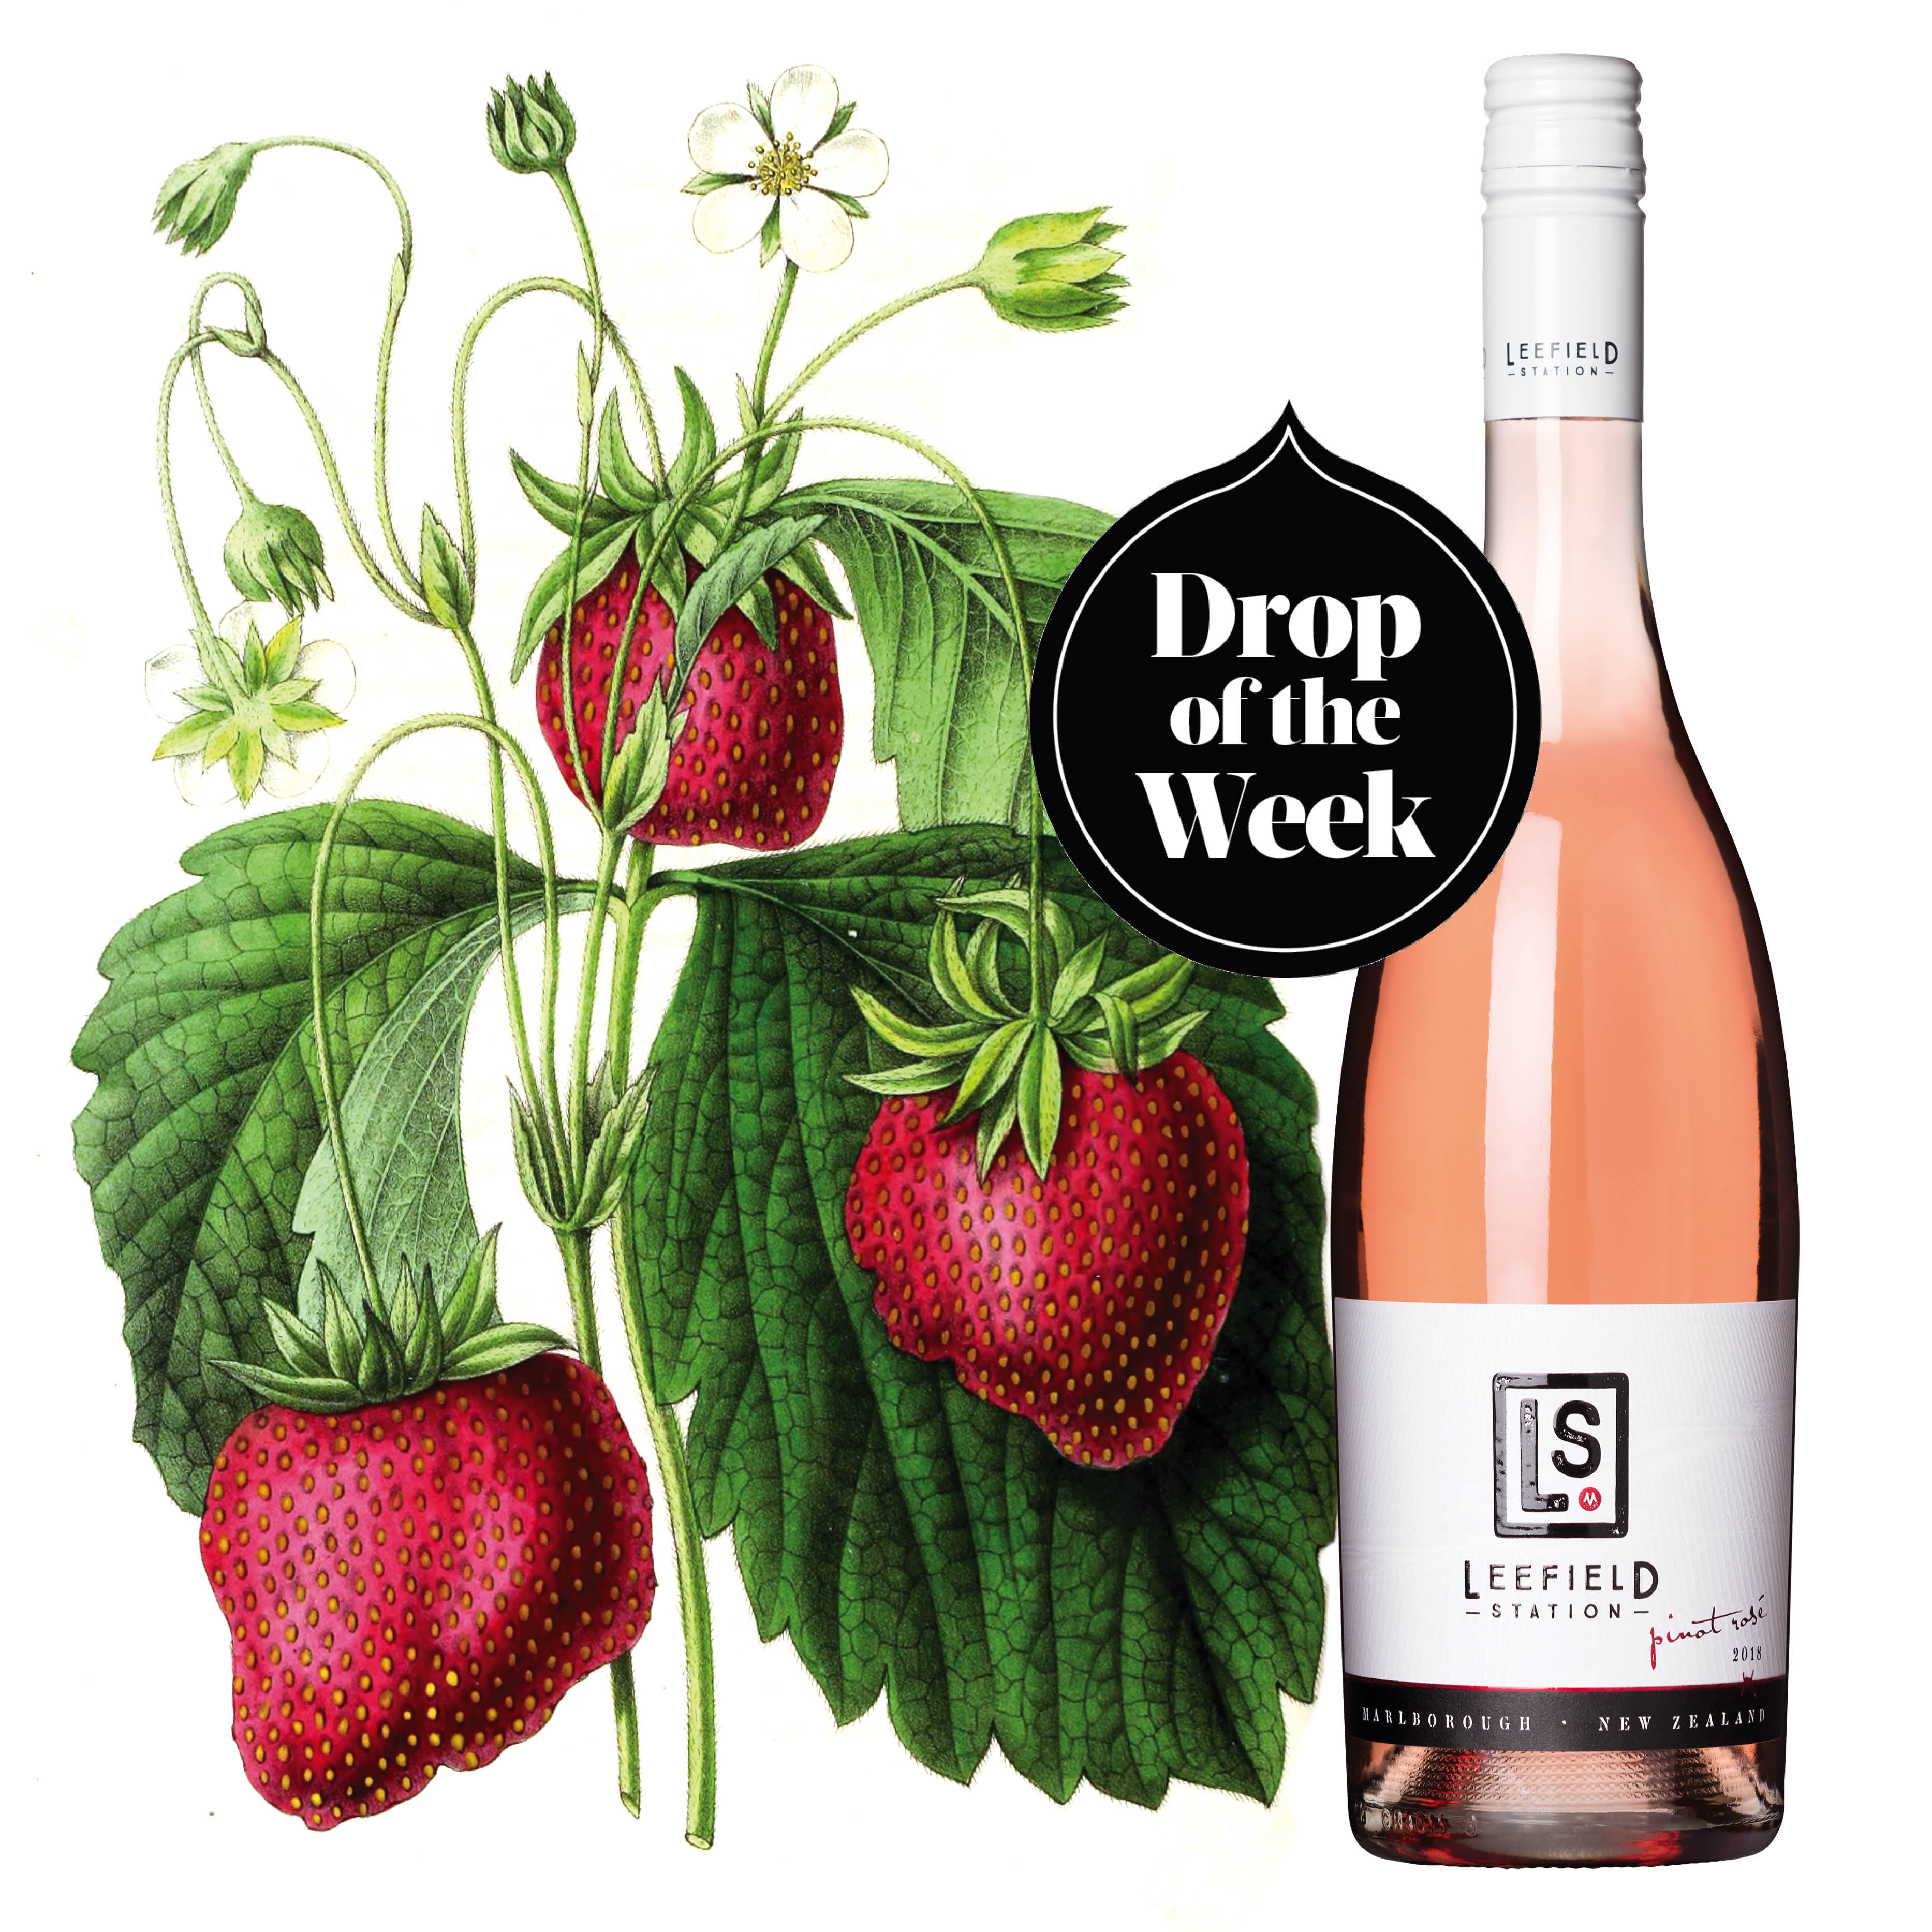 Drop of the Week: Leefield Station Pinot Rose 2018